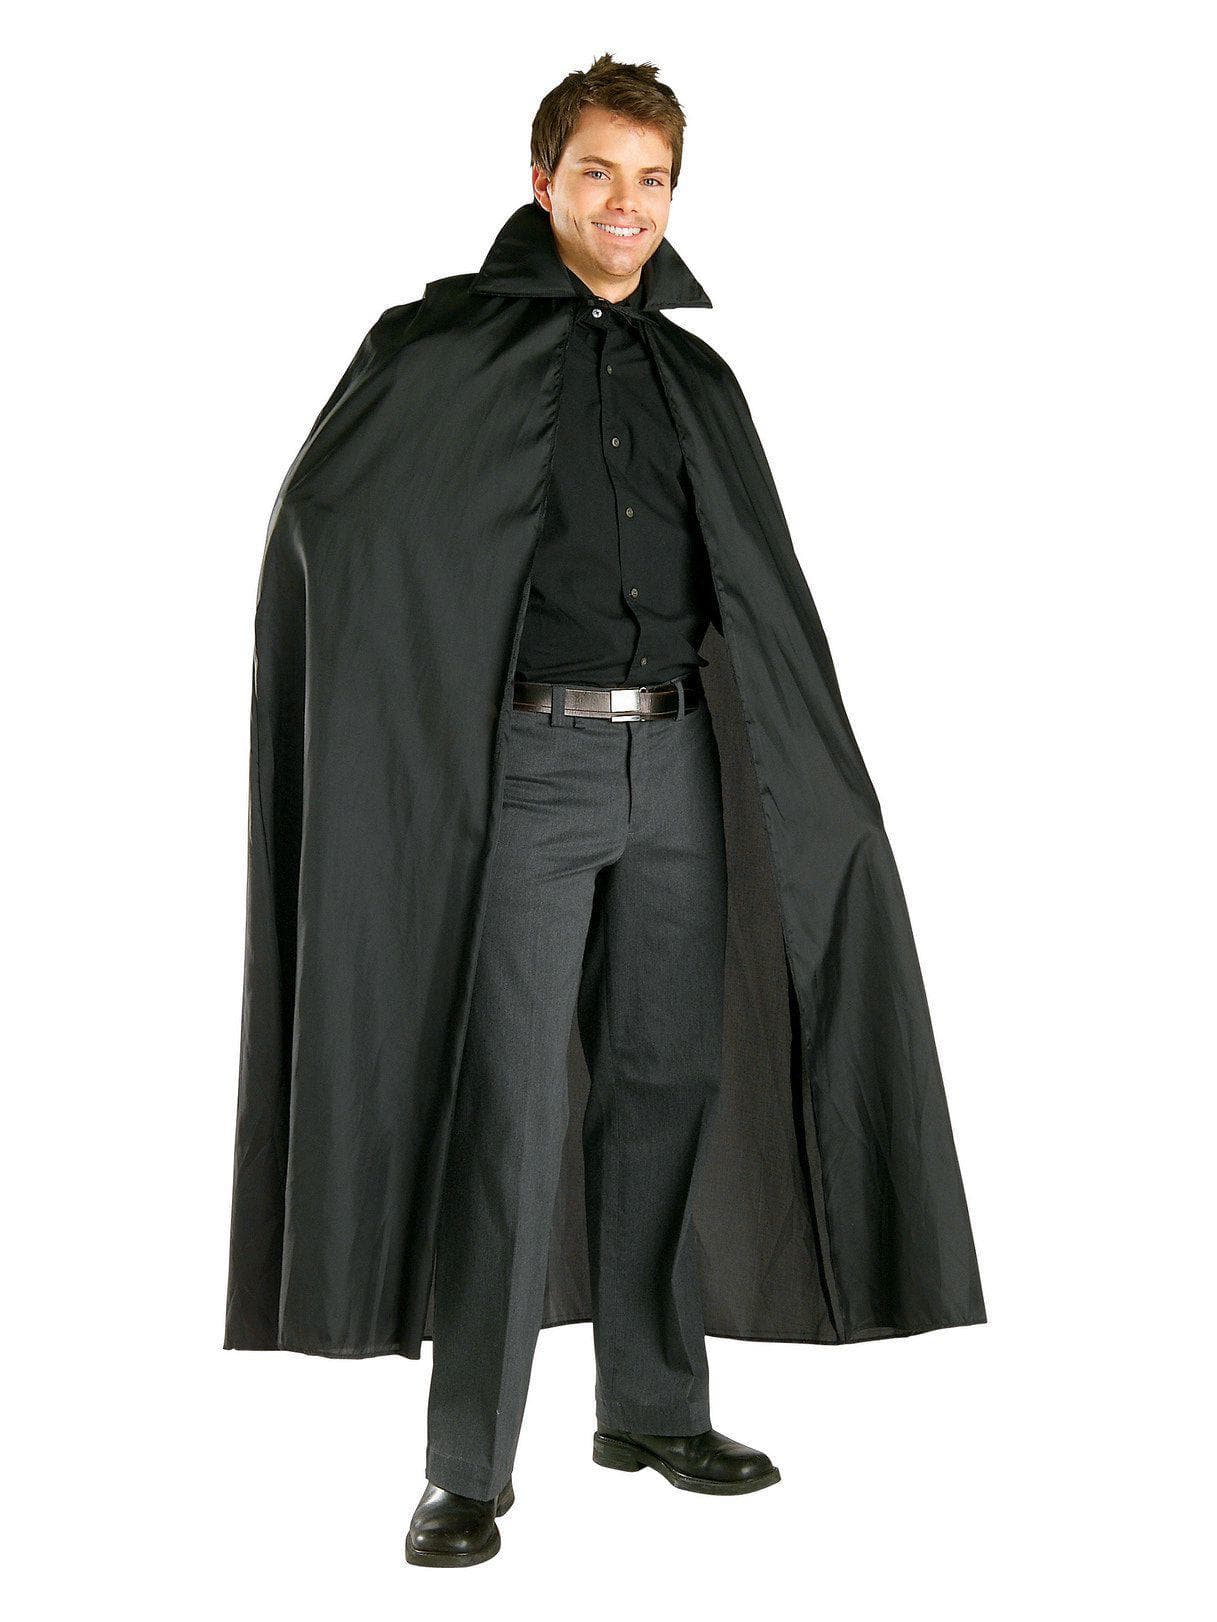 Black Satin Cape - costumes.com